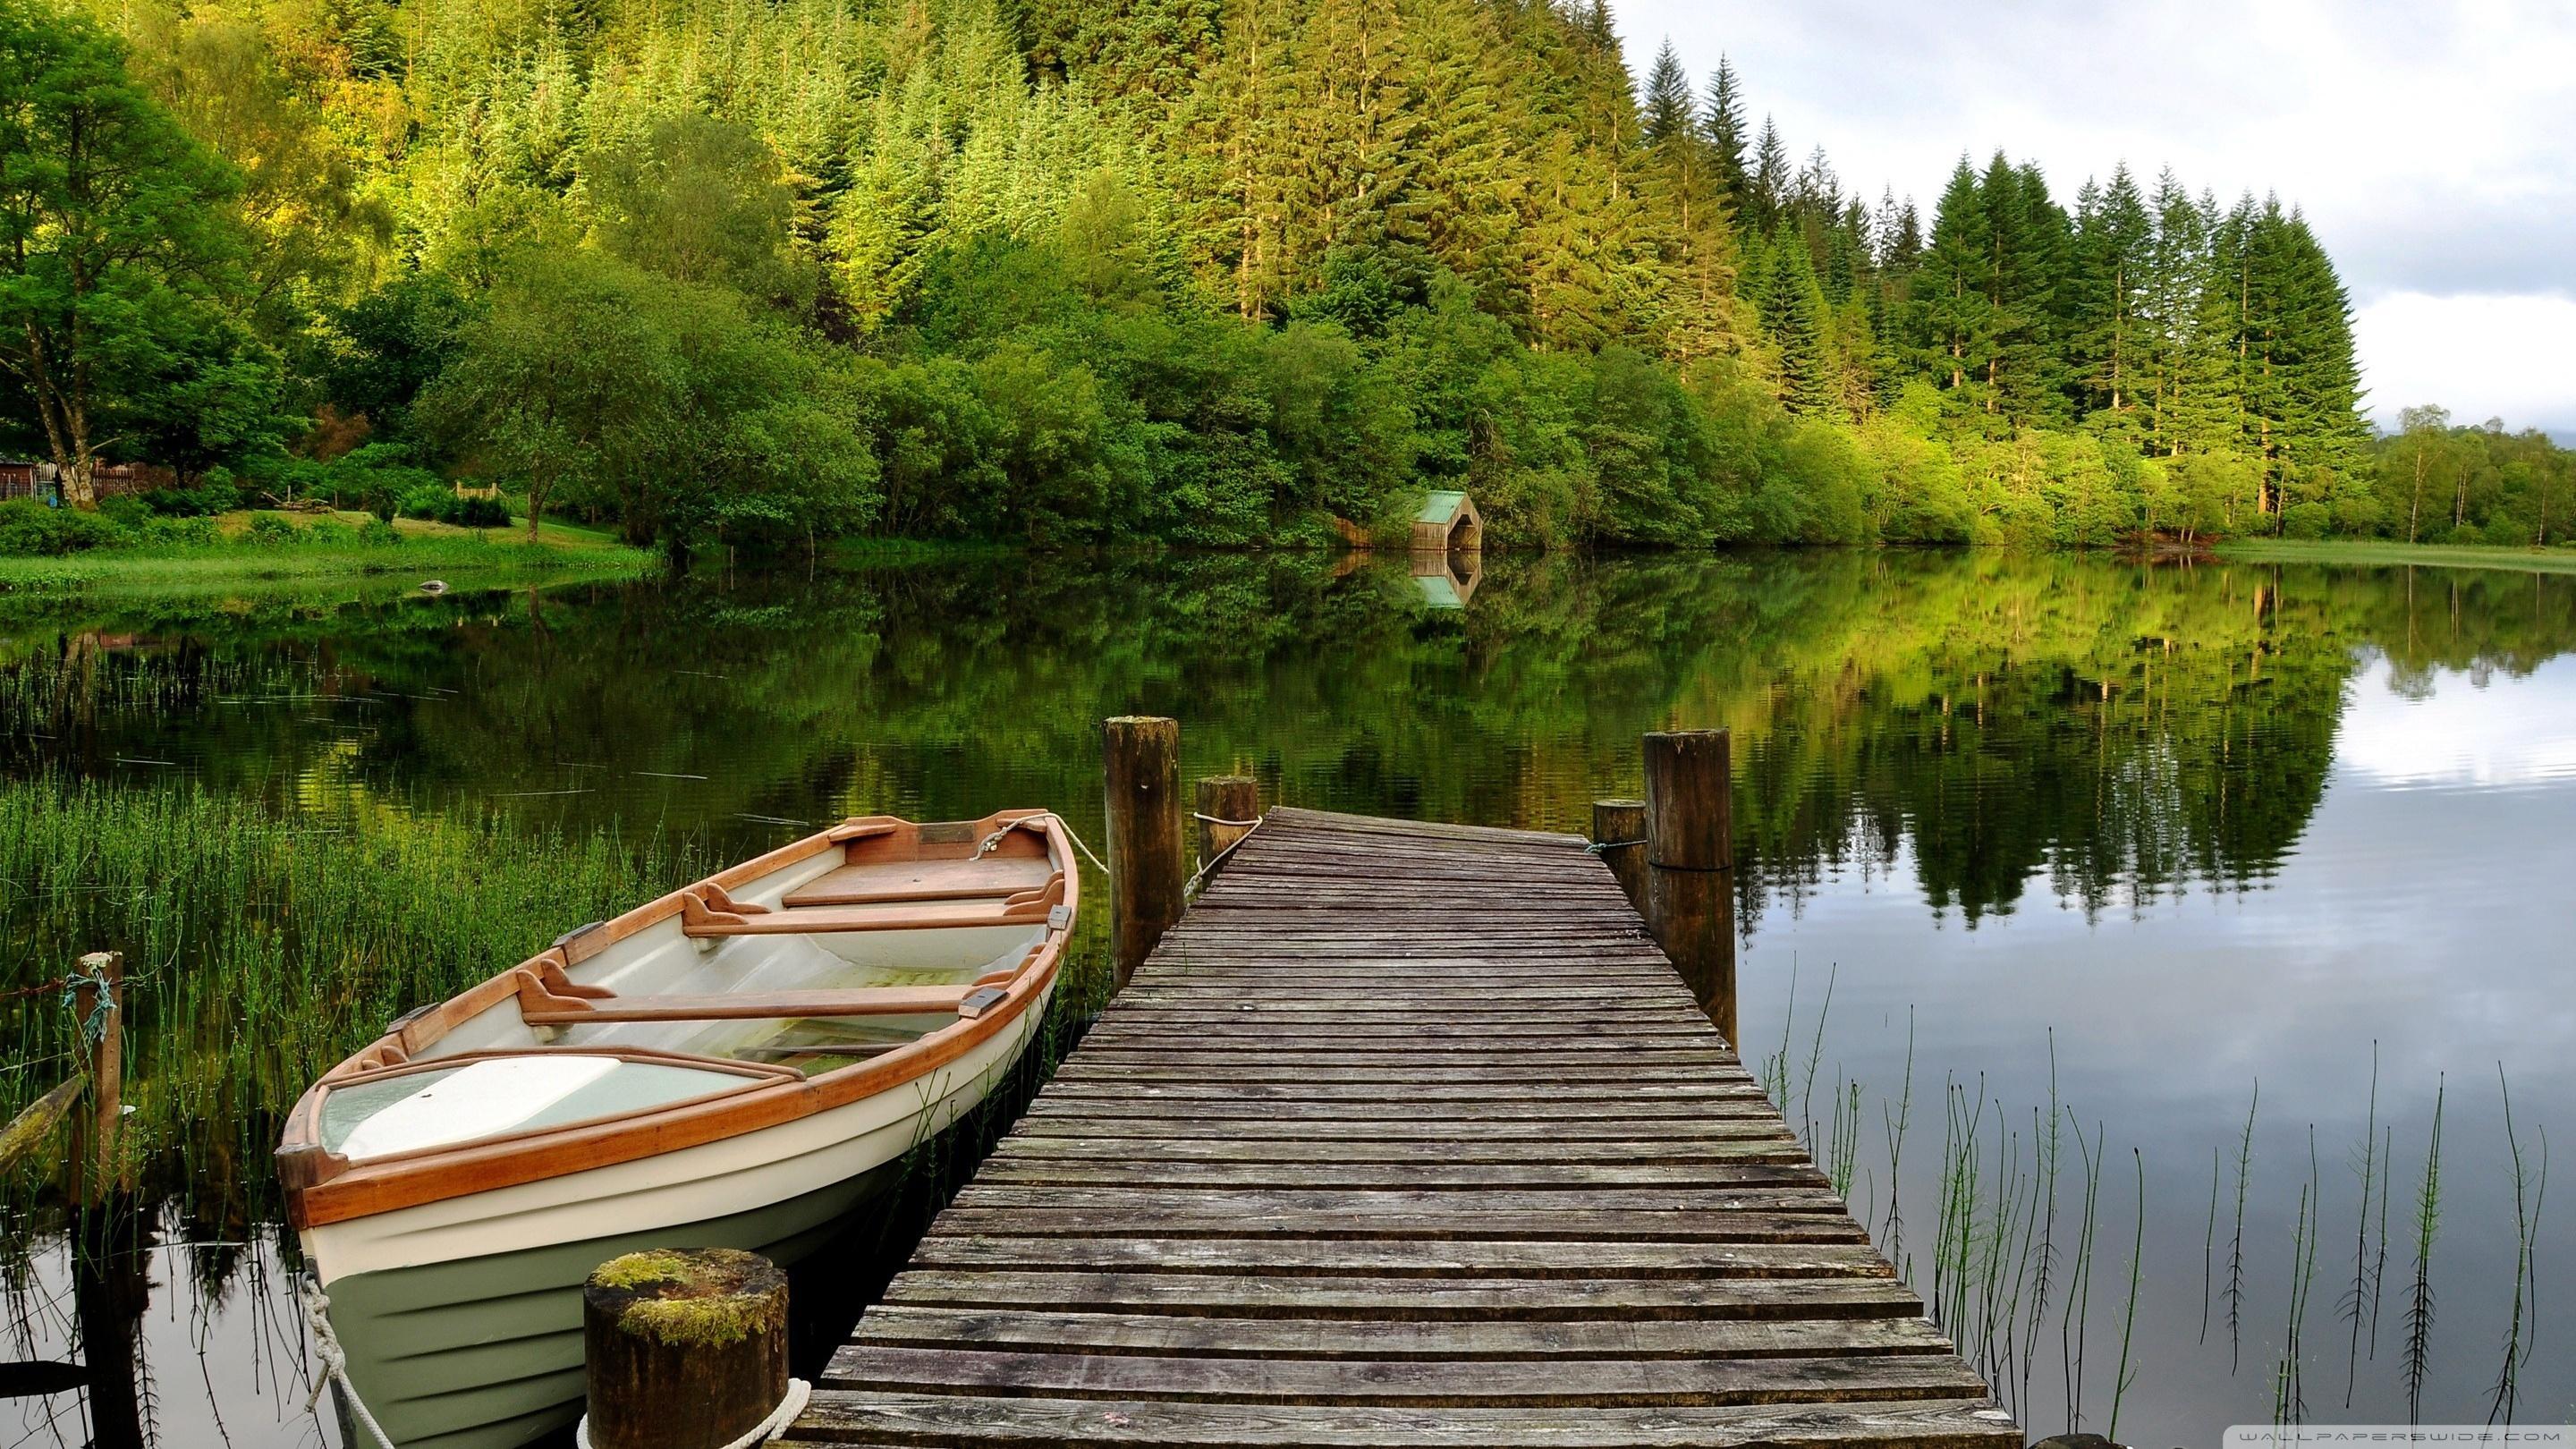 Boat In Green Lake With Wooden Bridge Ultra HD Desktop Background Wallpaper for 4K UHD TV, Tablet